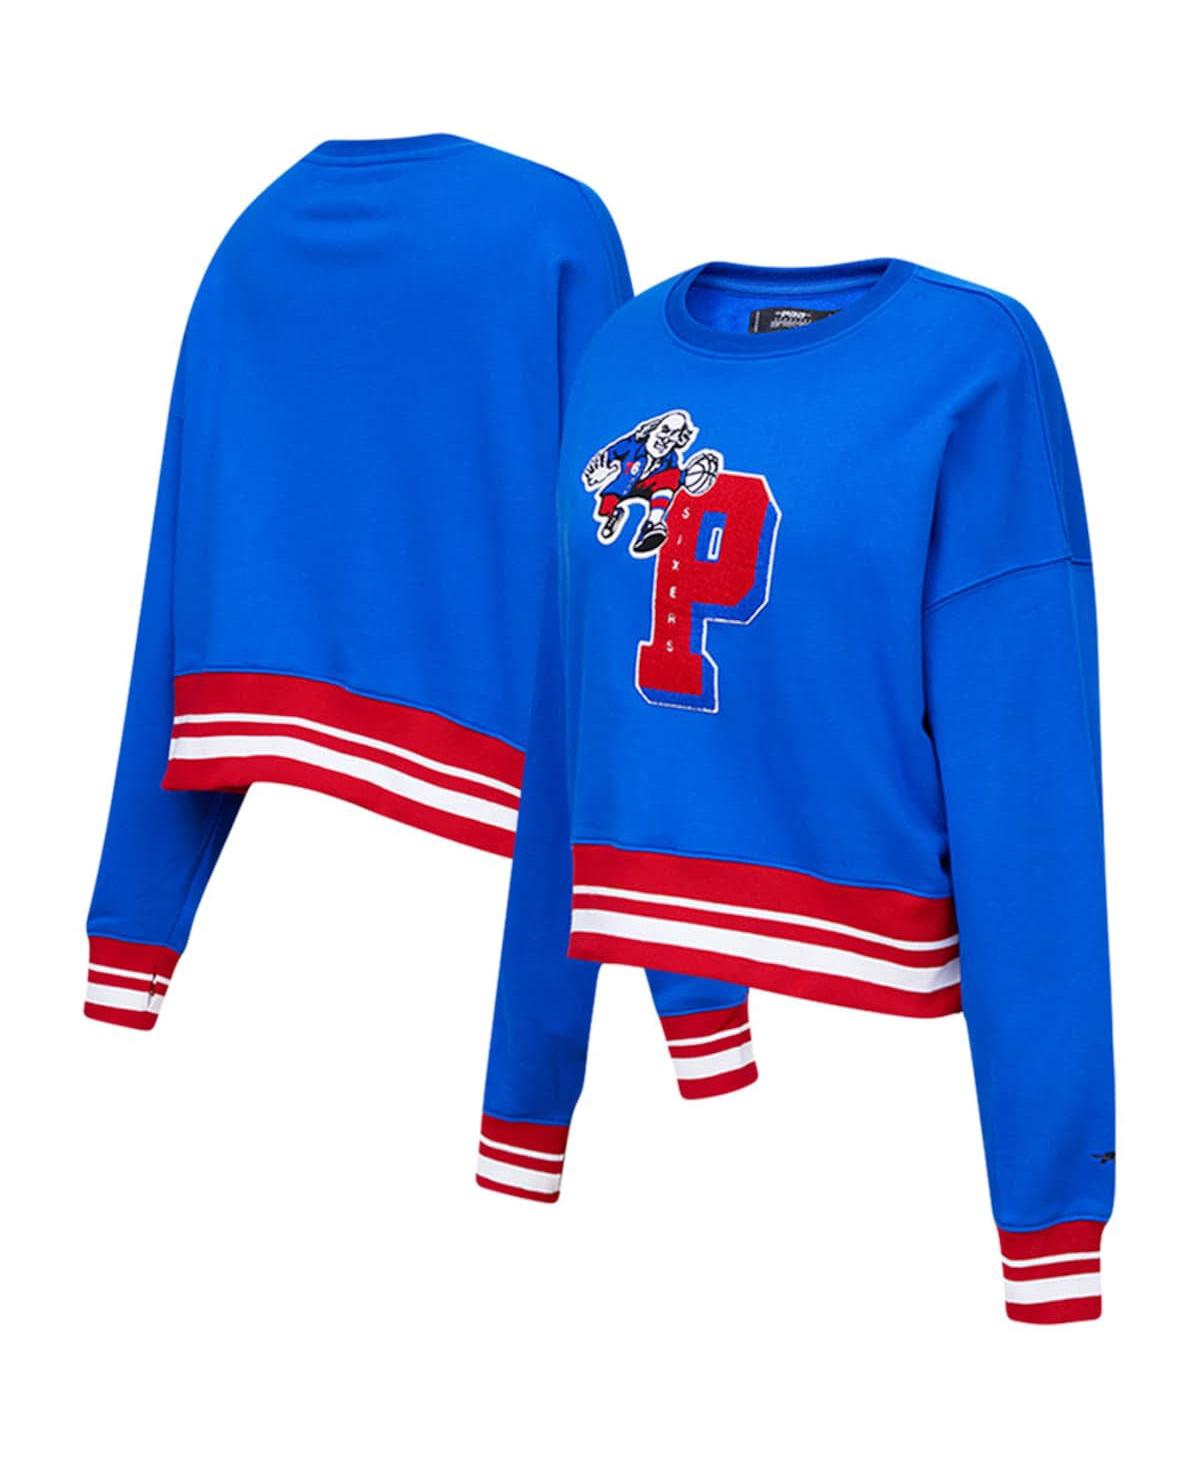 Shop Pro Standard Women's  Royal Philadelphia 76ers Mash Up Pullover Sweatshirt